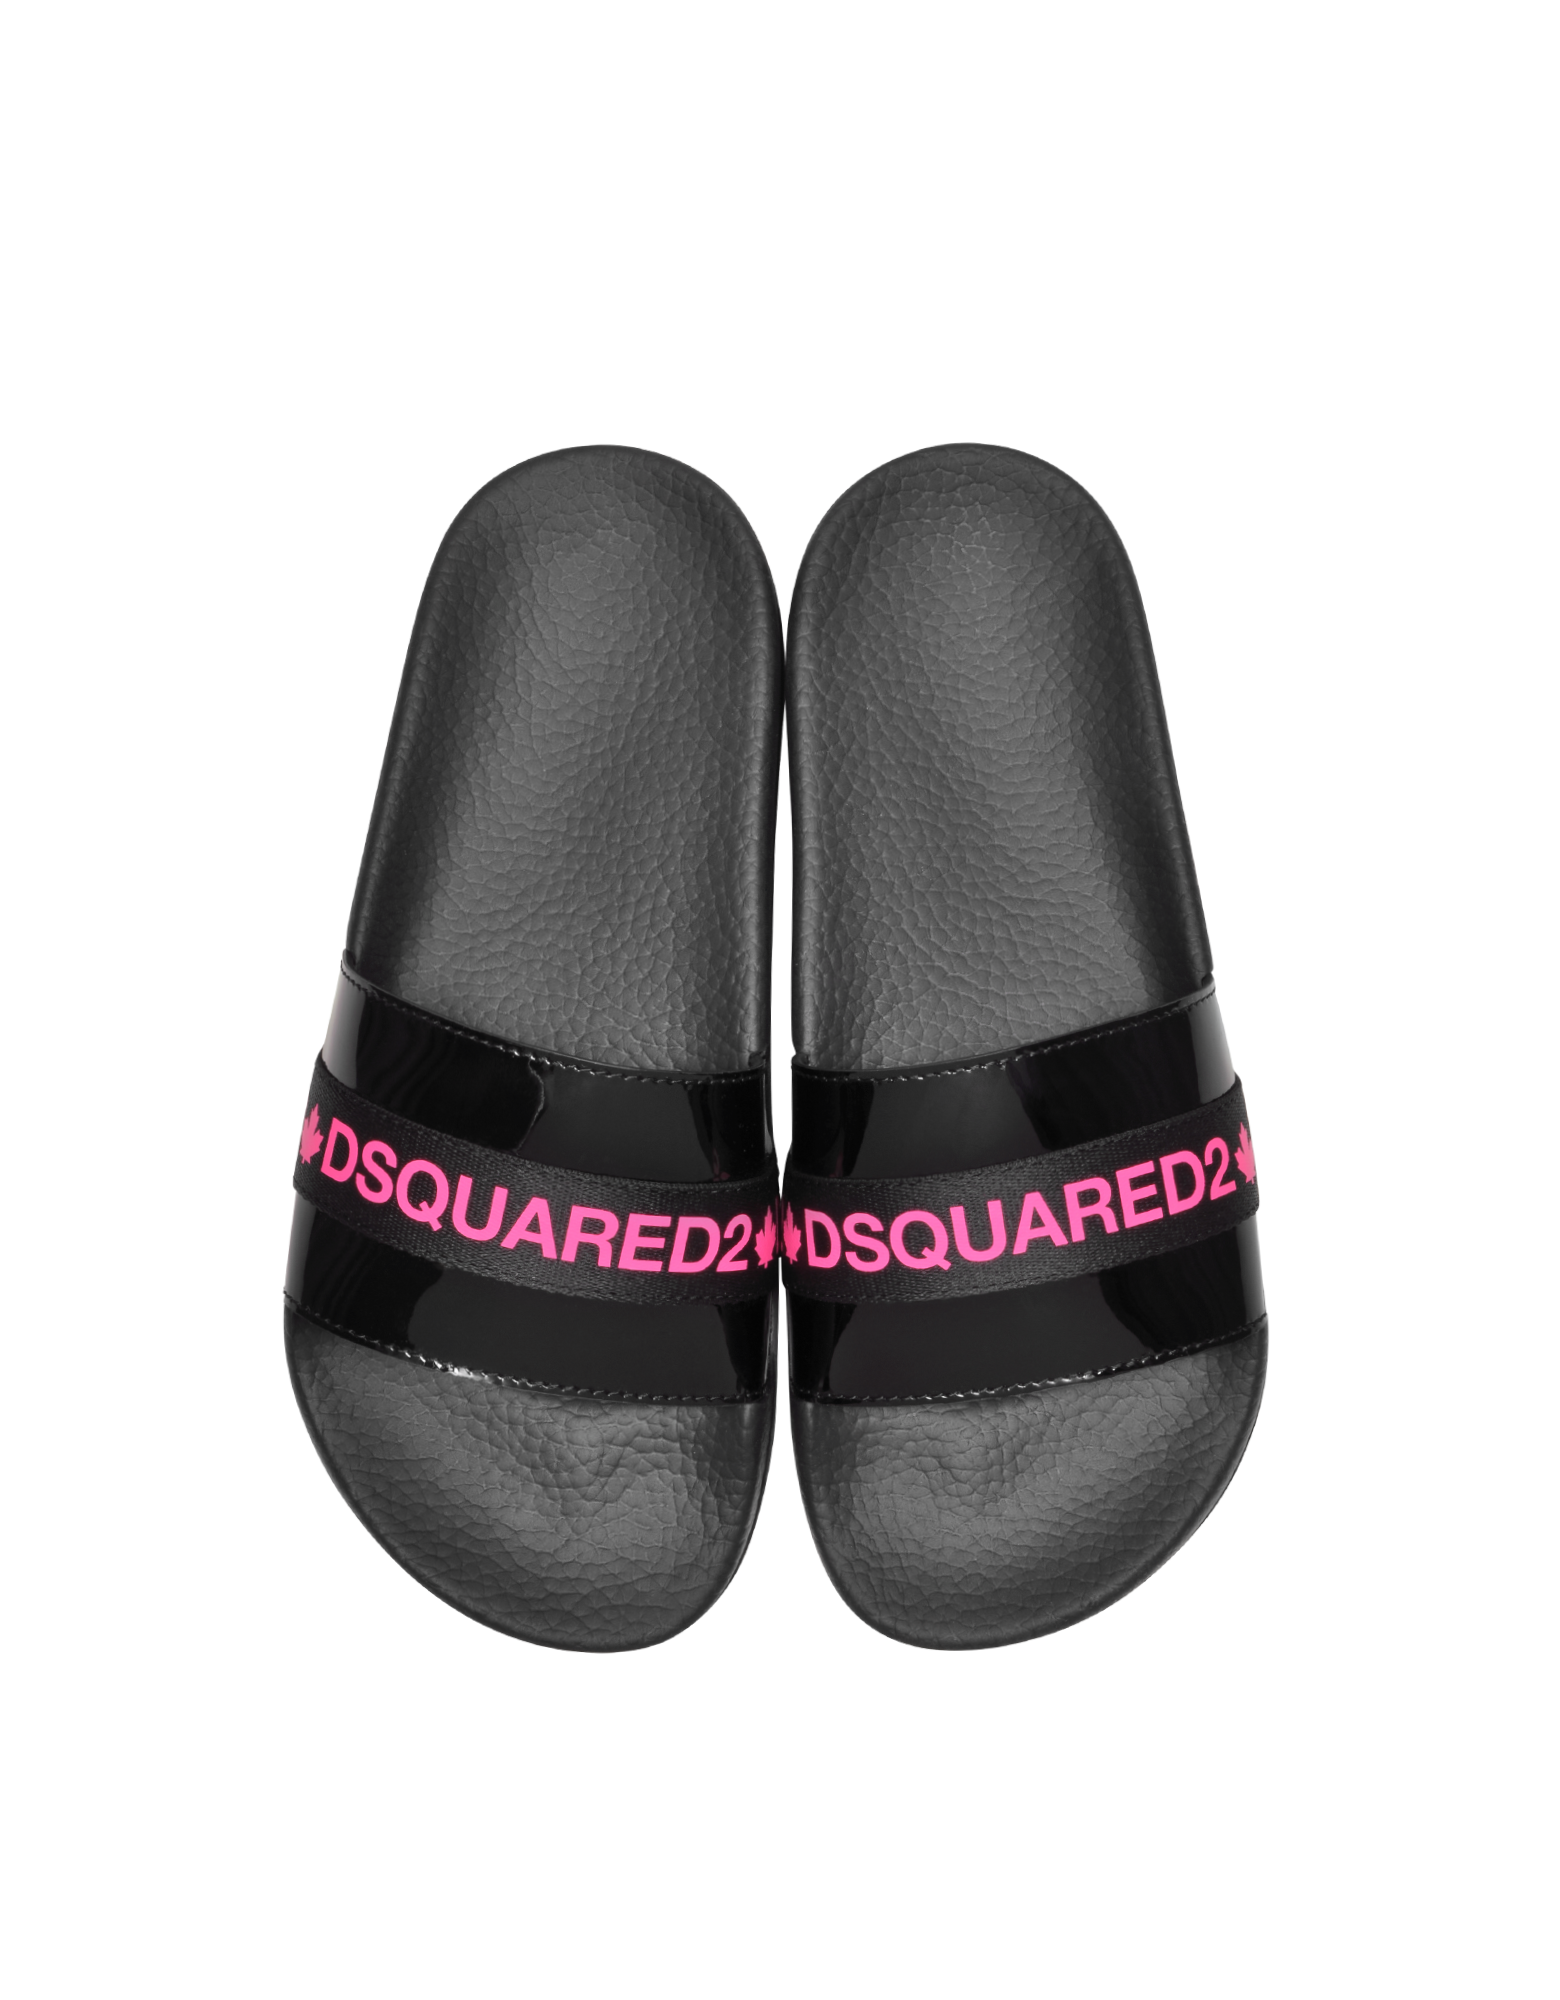 designer shoes dsquared2